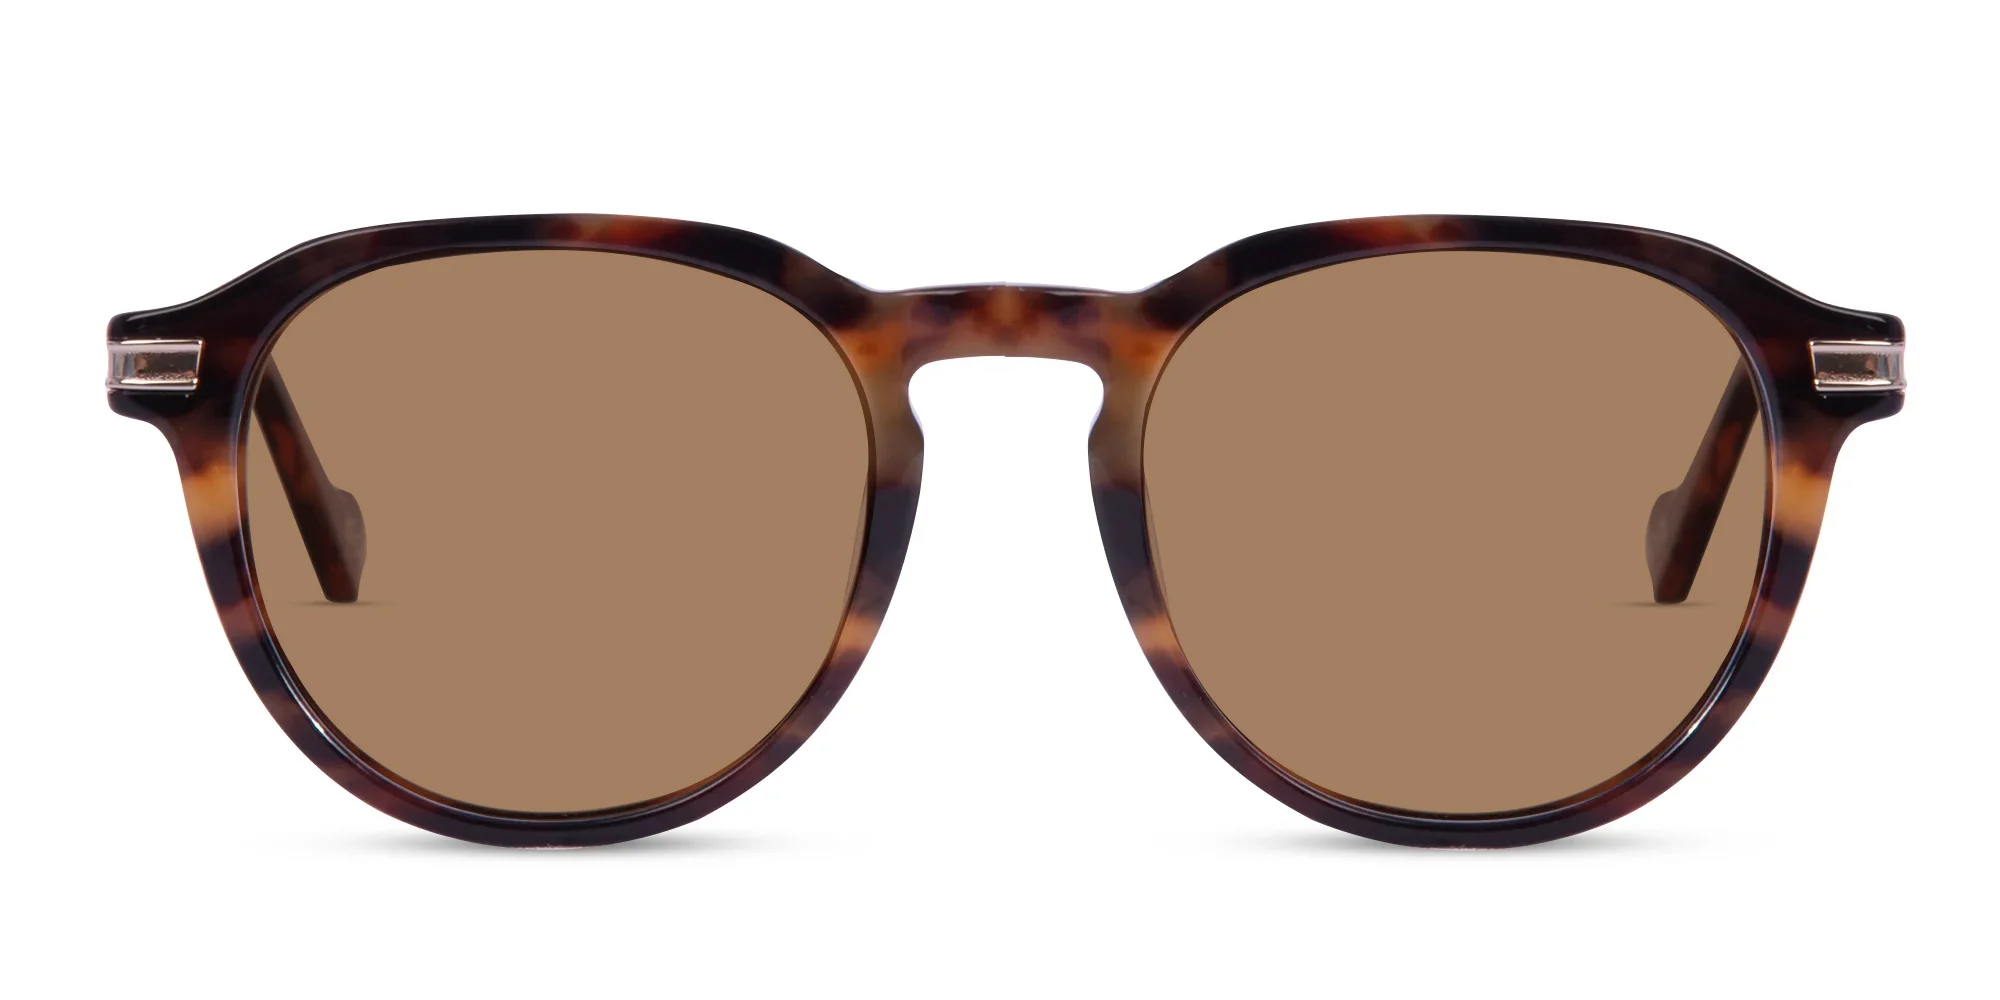 New Round Small Fashion Vintage Sunglasses Men Women-Jack Marc –